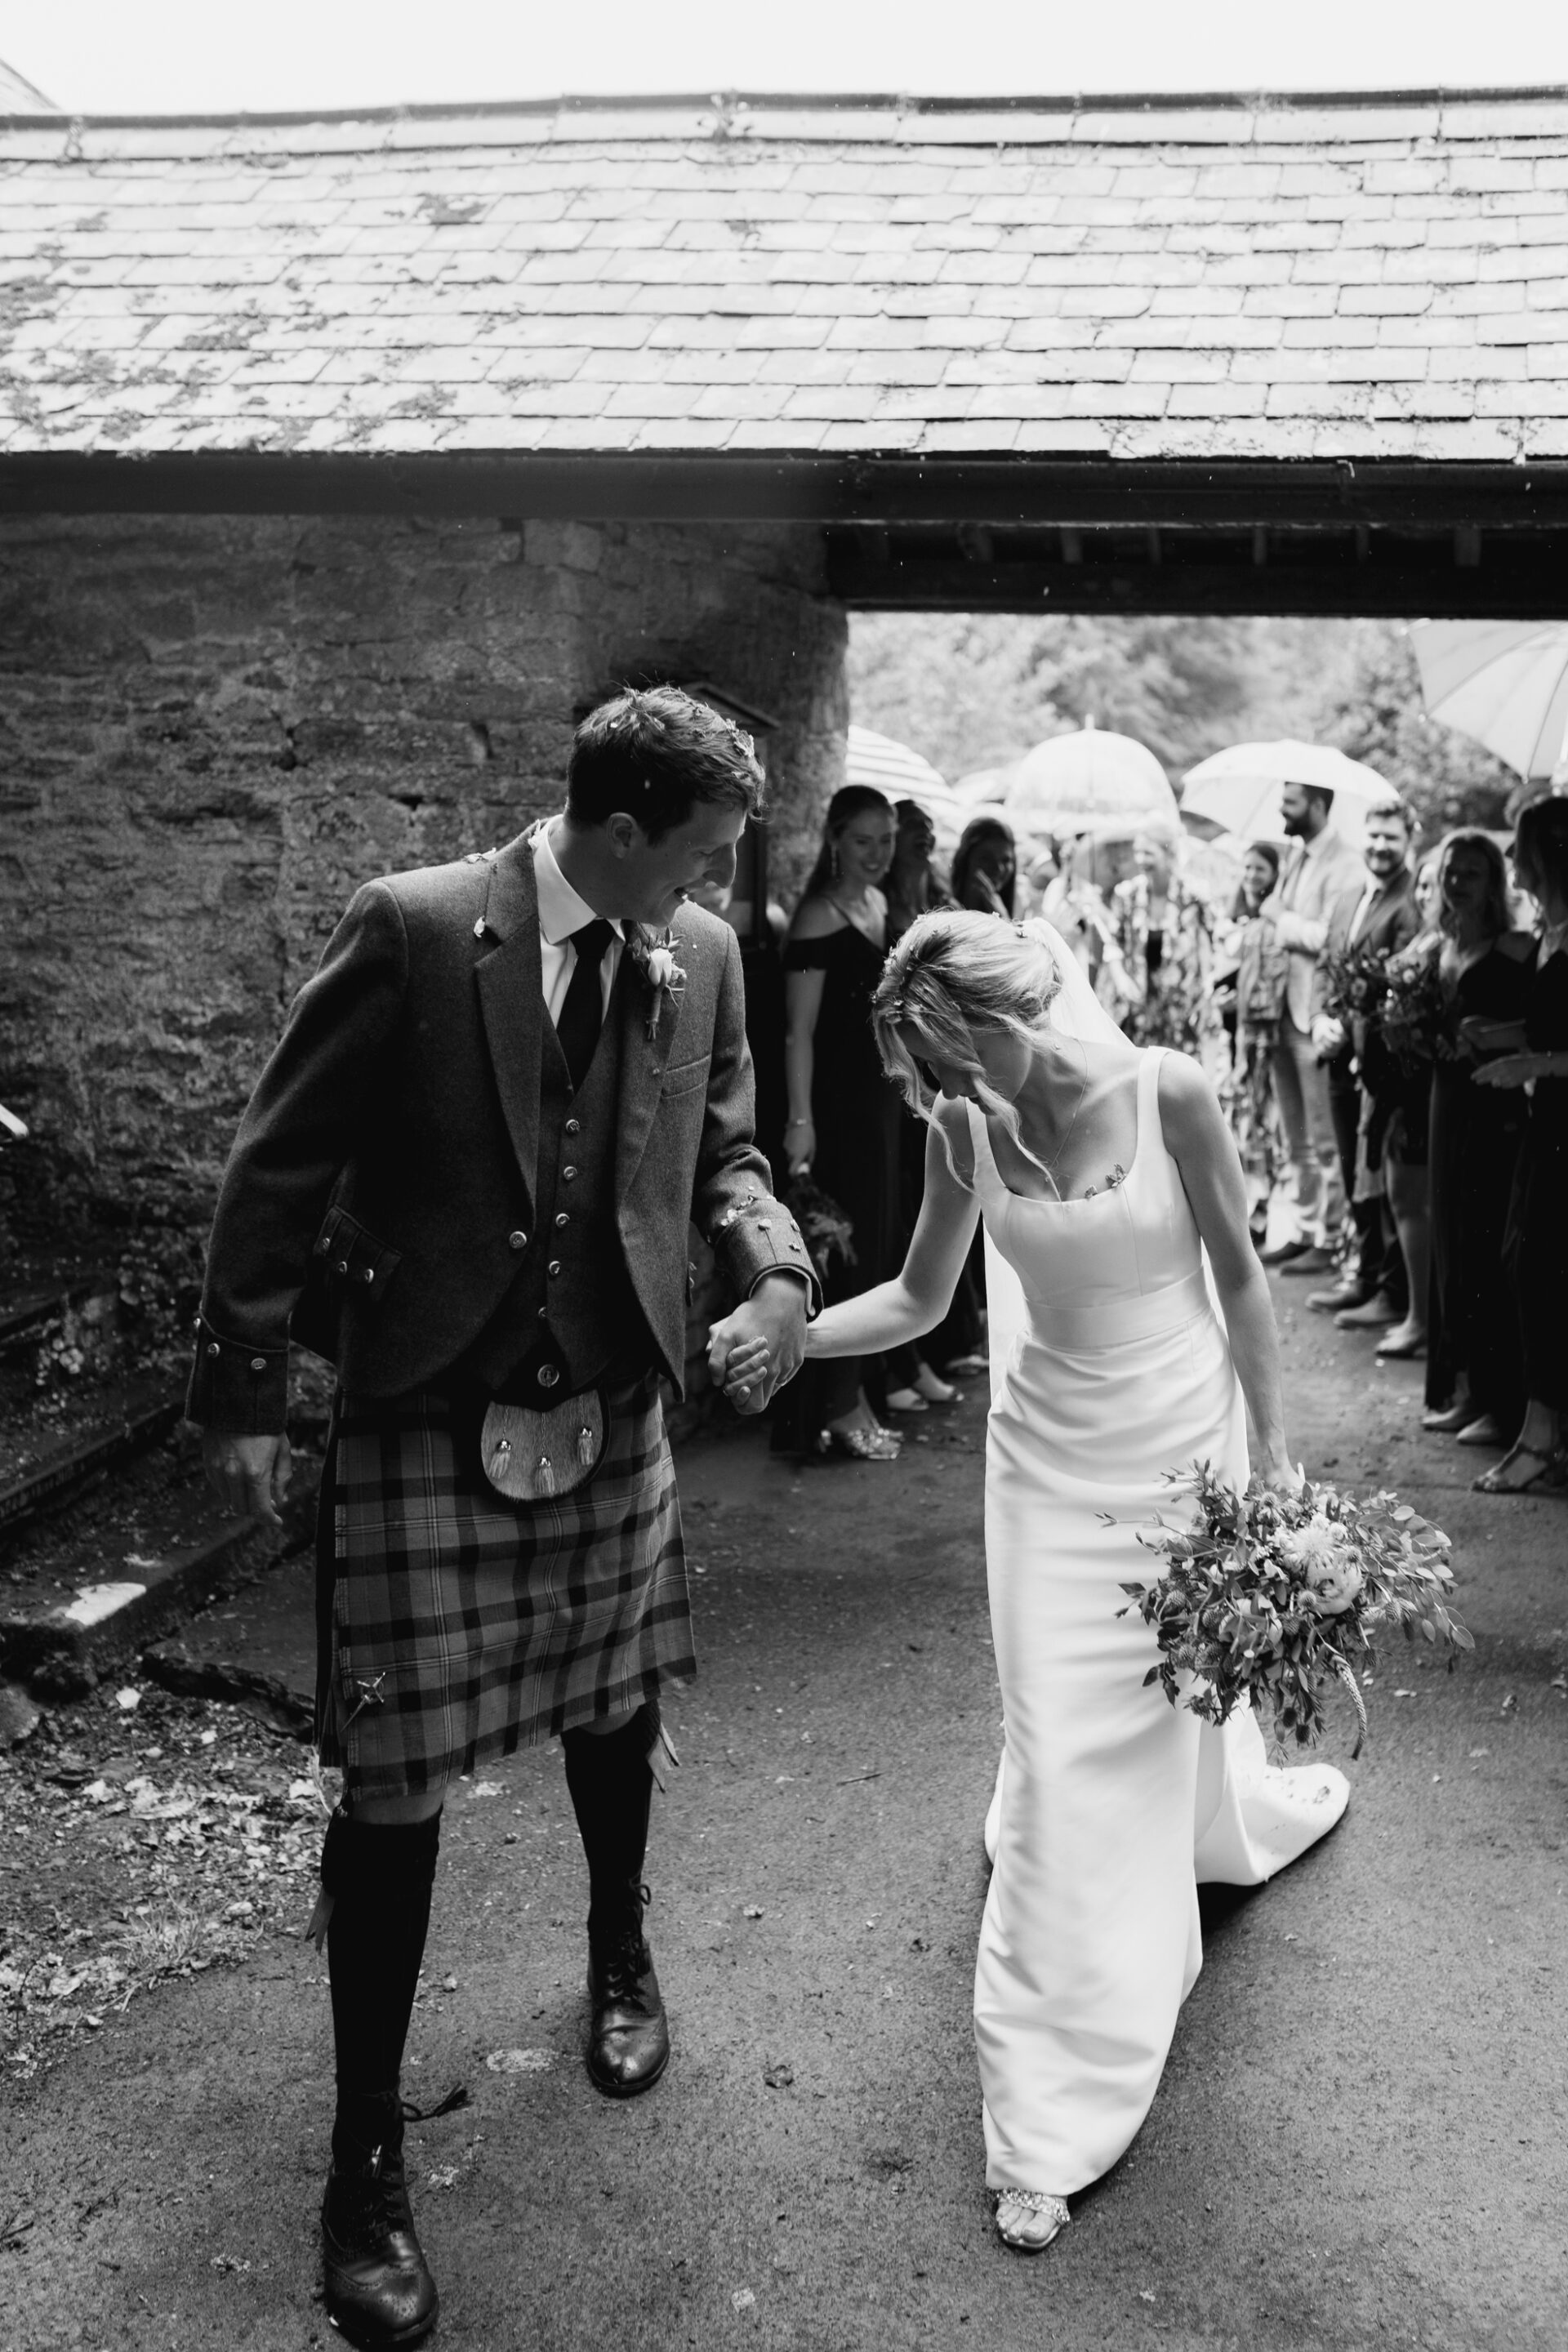 The bride and groom leave their Devon church wedding ceremony